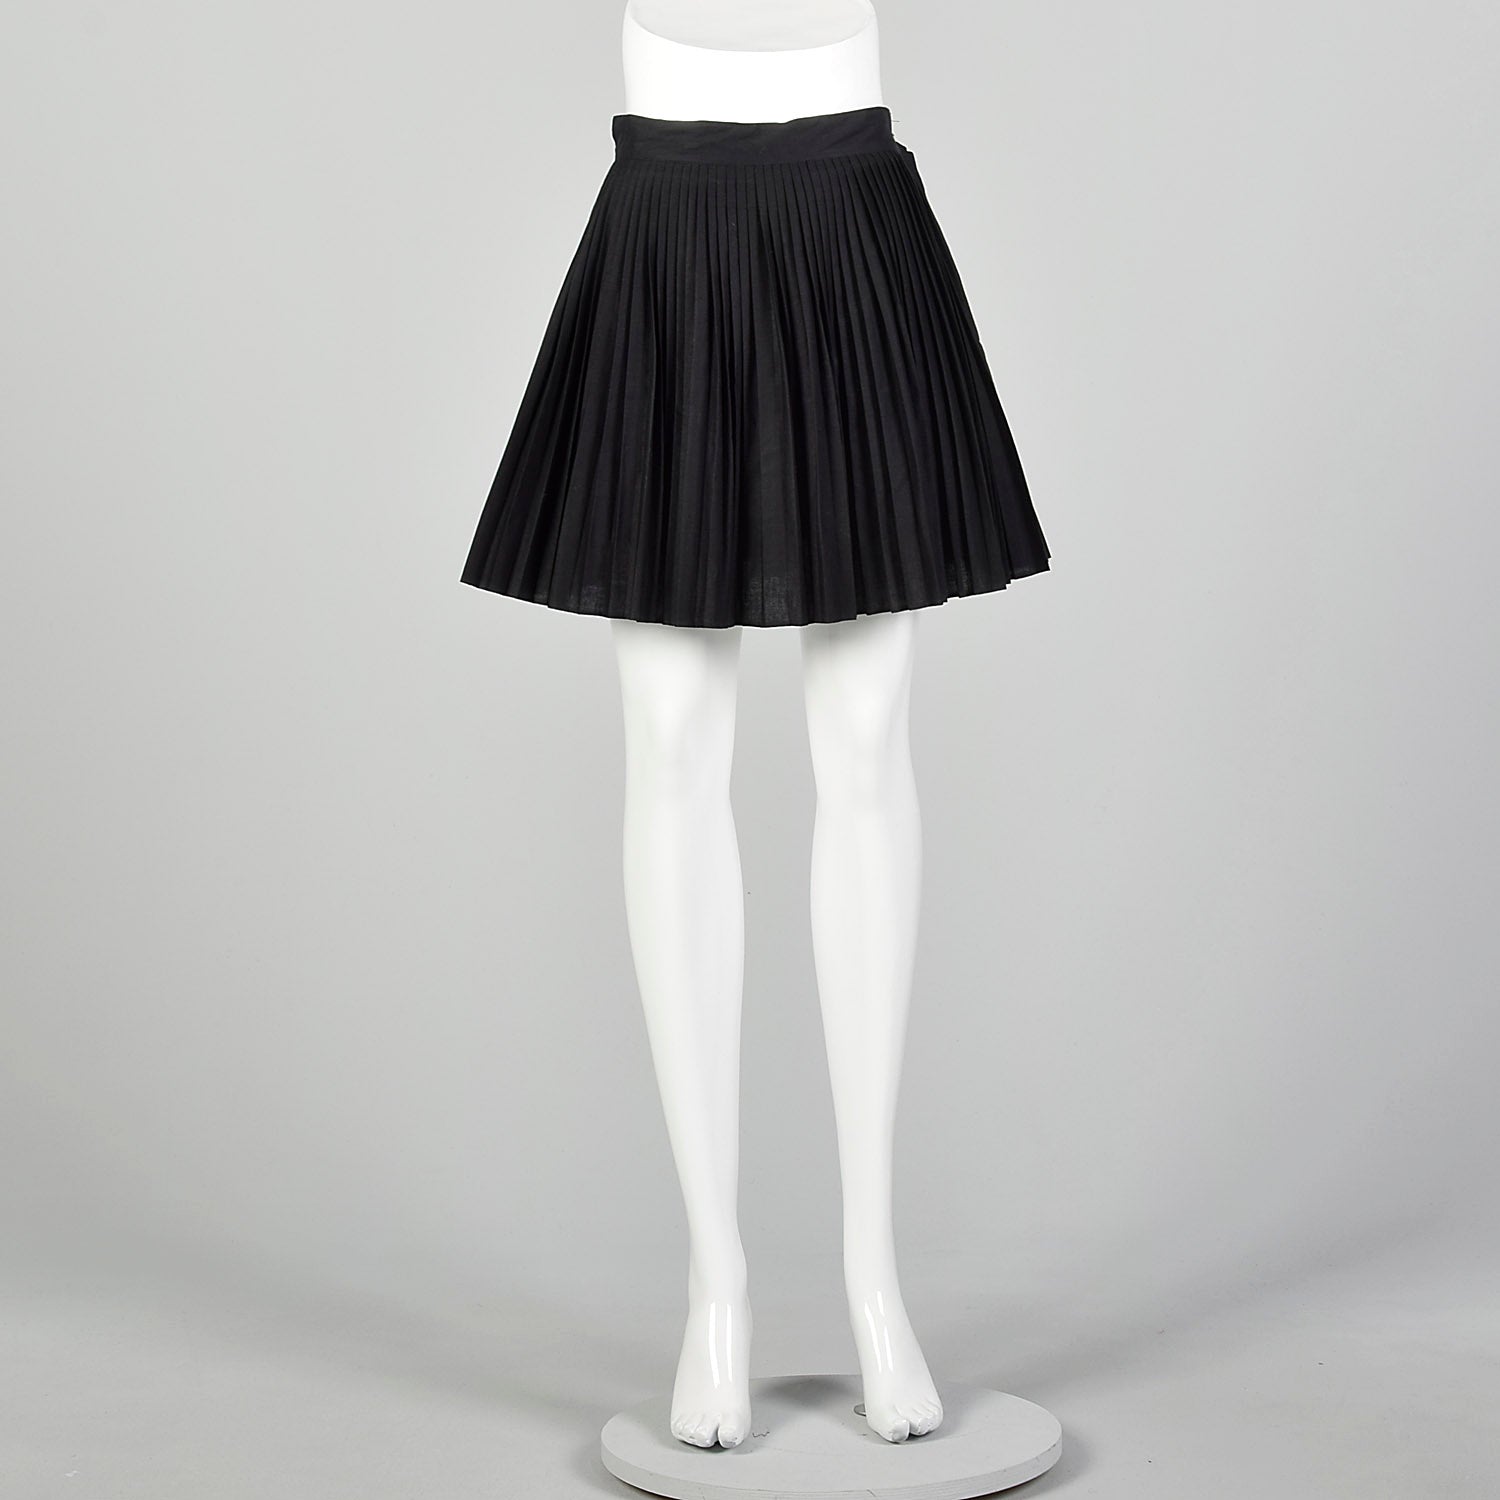 Small 1960s Black Pleated Micro Mini Skirt